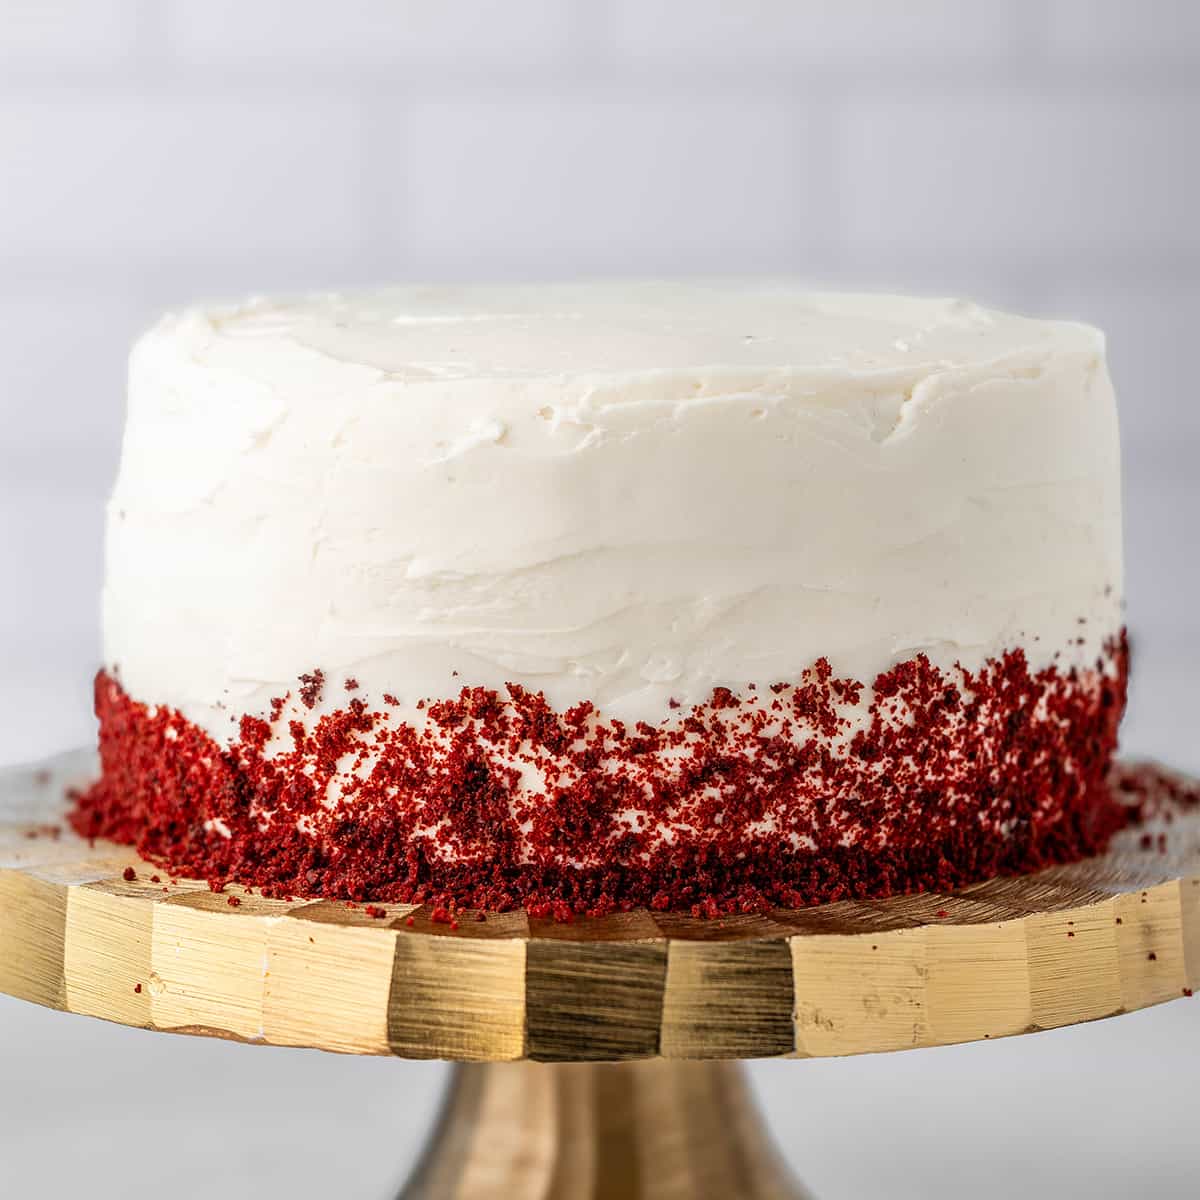 A whole red velvet cake.